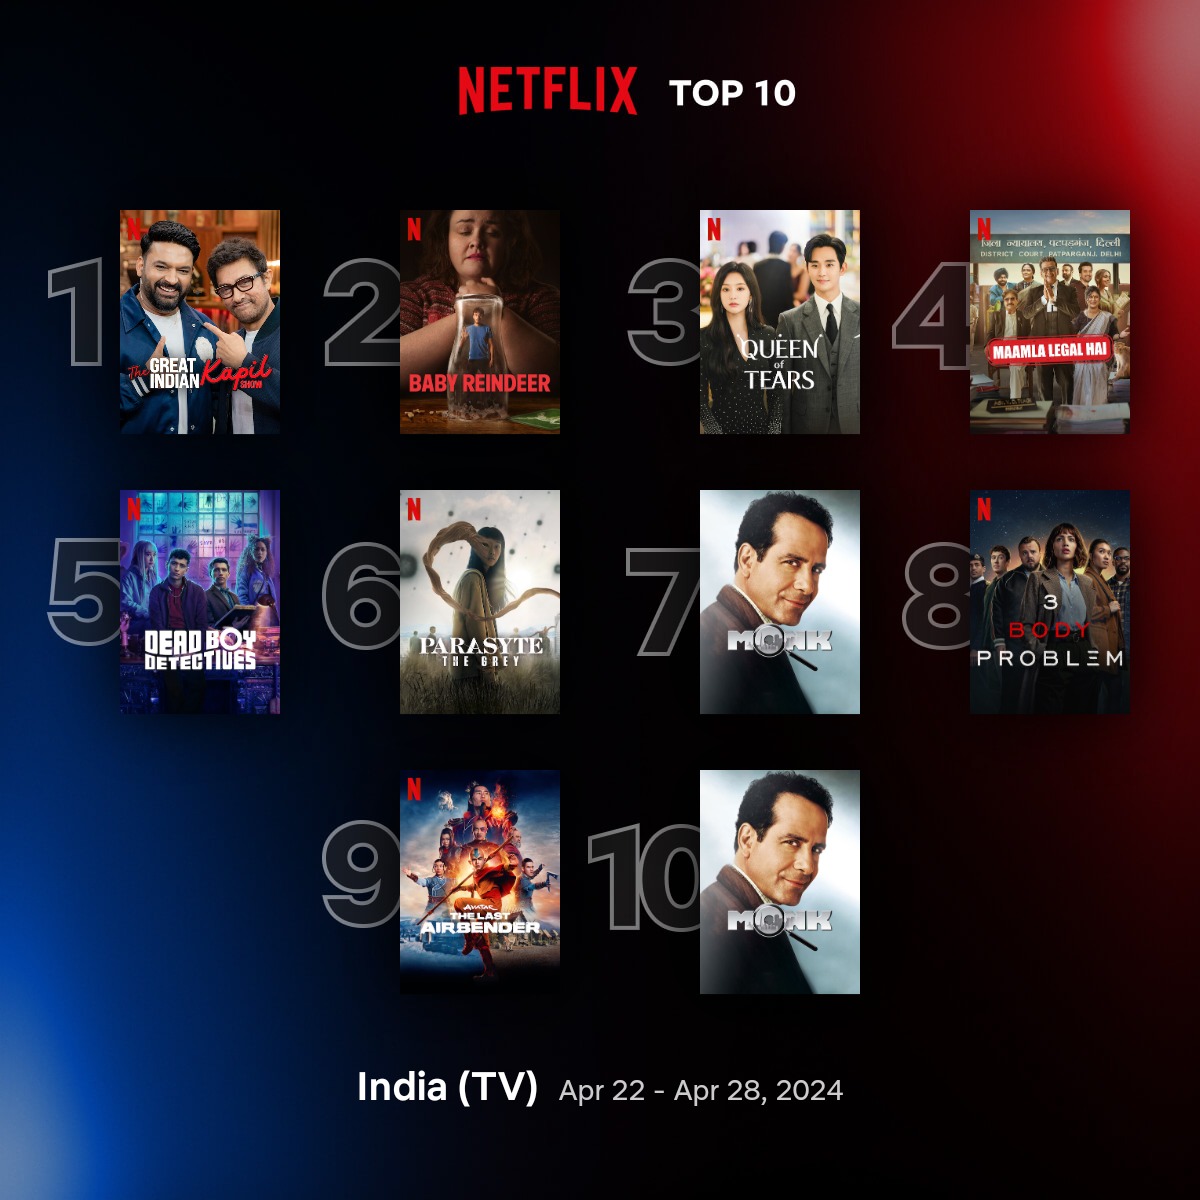 Top 10 TV shows on #Netflix India (22-28 April) 1.#TheGreatIndianKapilShow 3.#QueenOfTears 6.#ParasyteTheGrey